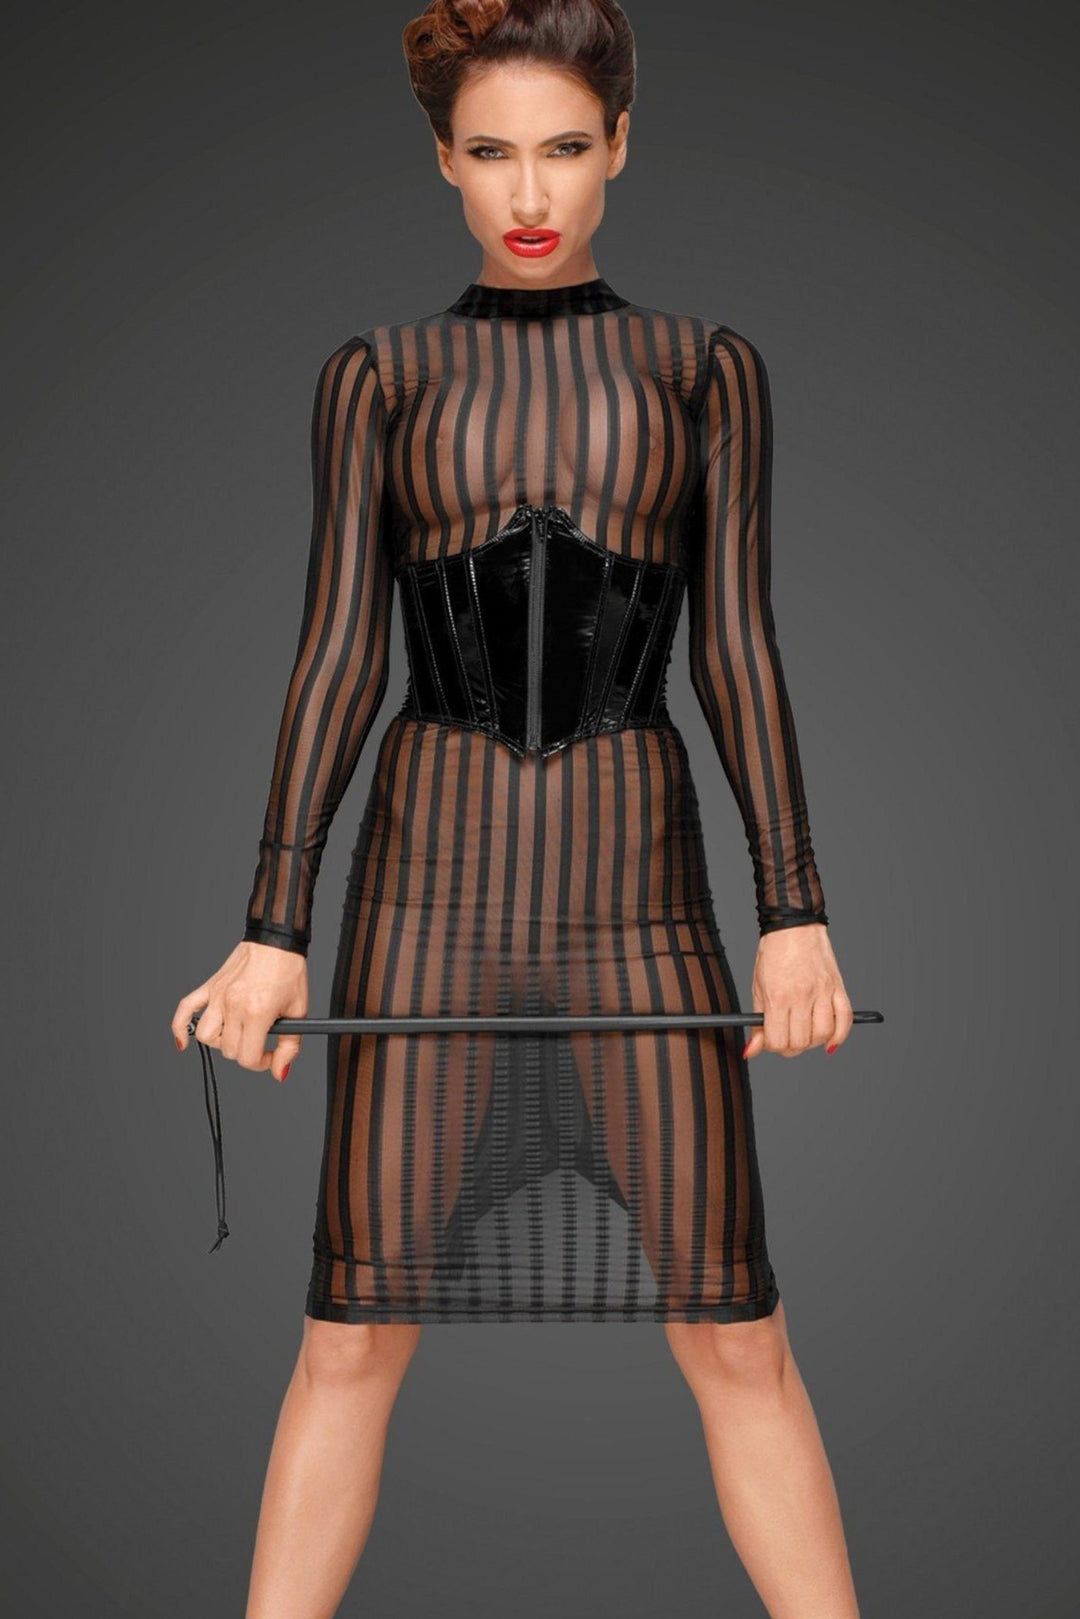 Classic Dress Made Of Elastic Tulle-Noir Handmade-SEXYSHOES.COM